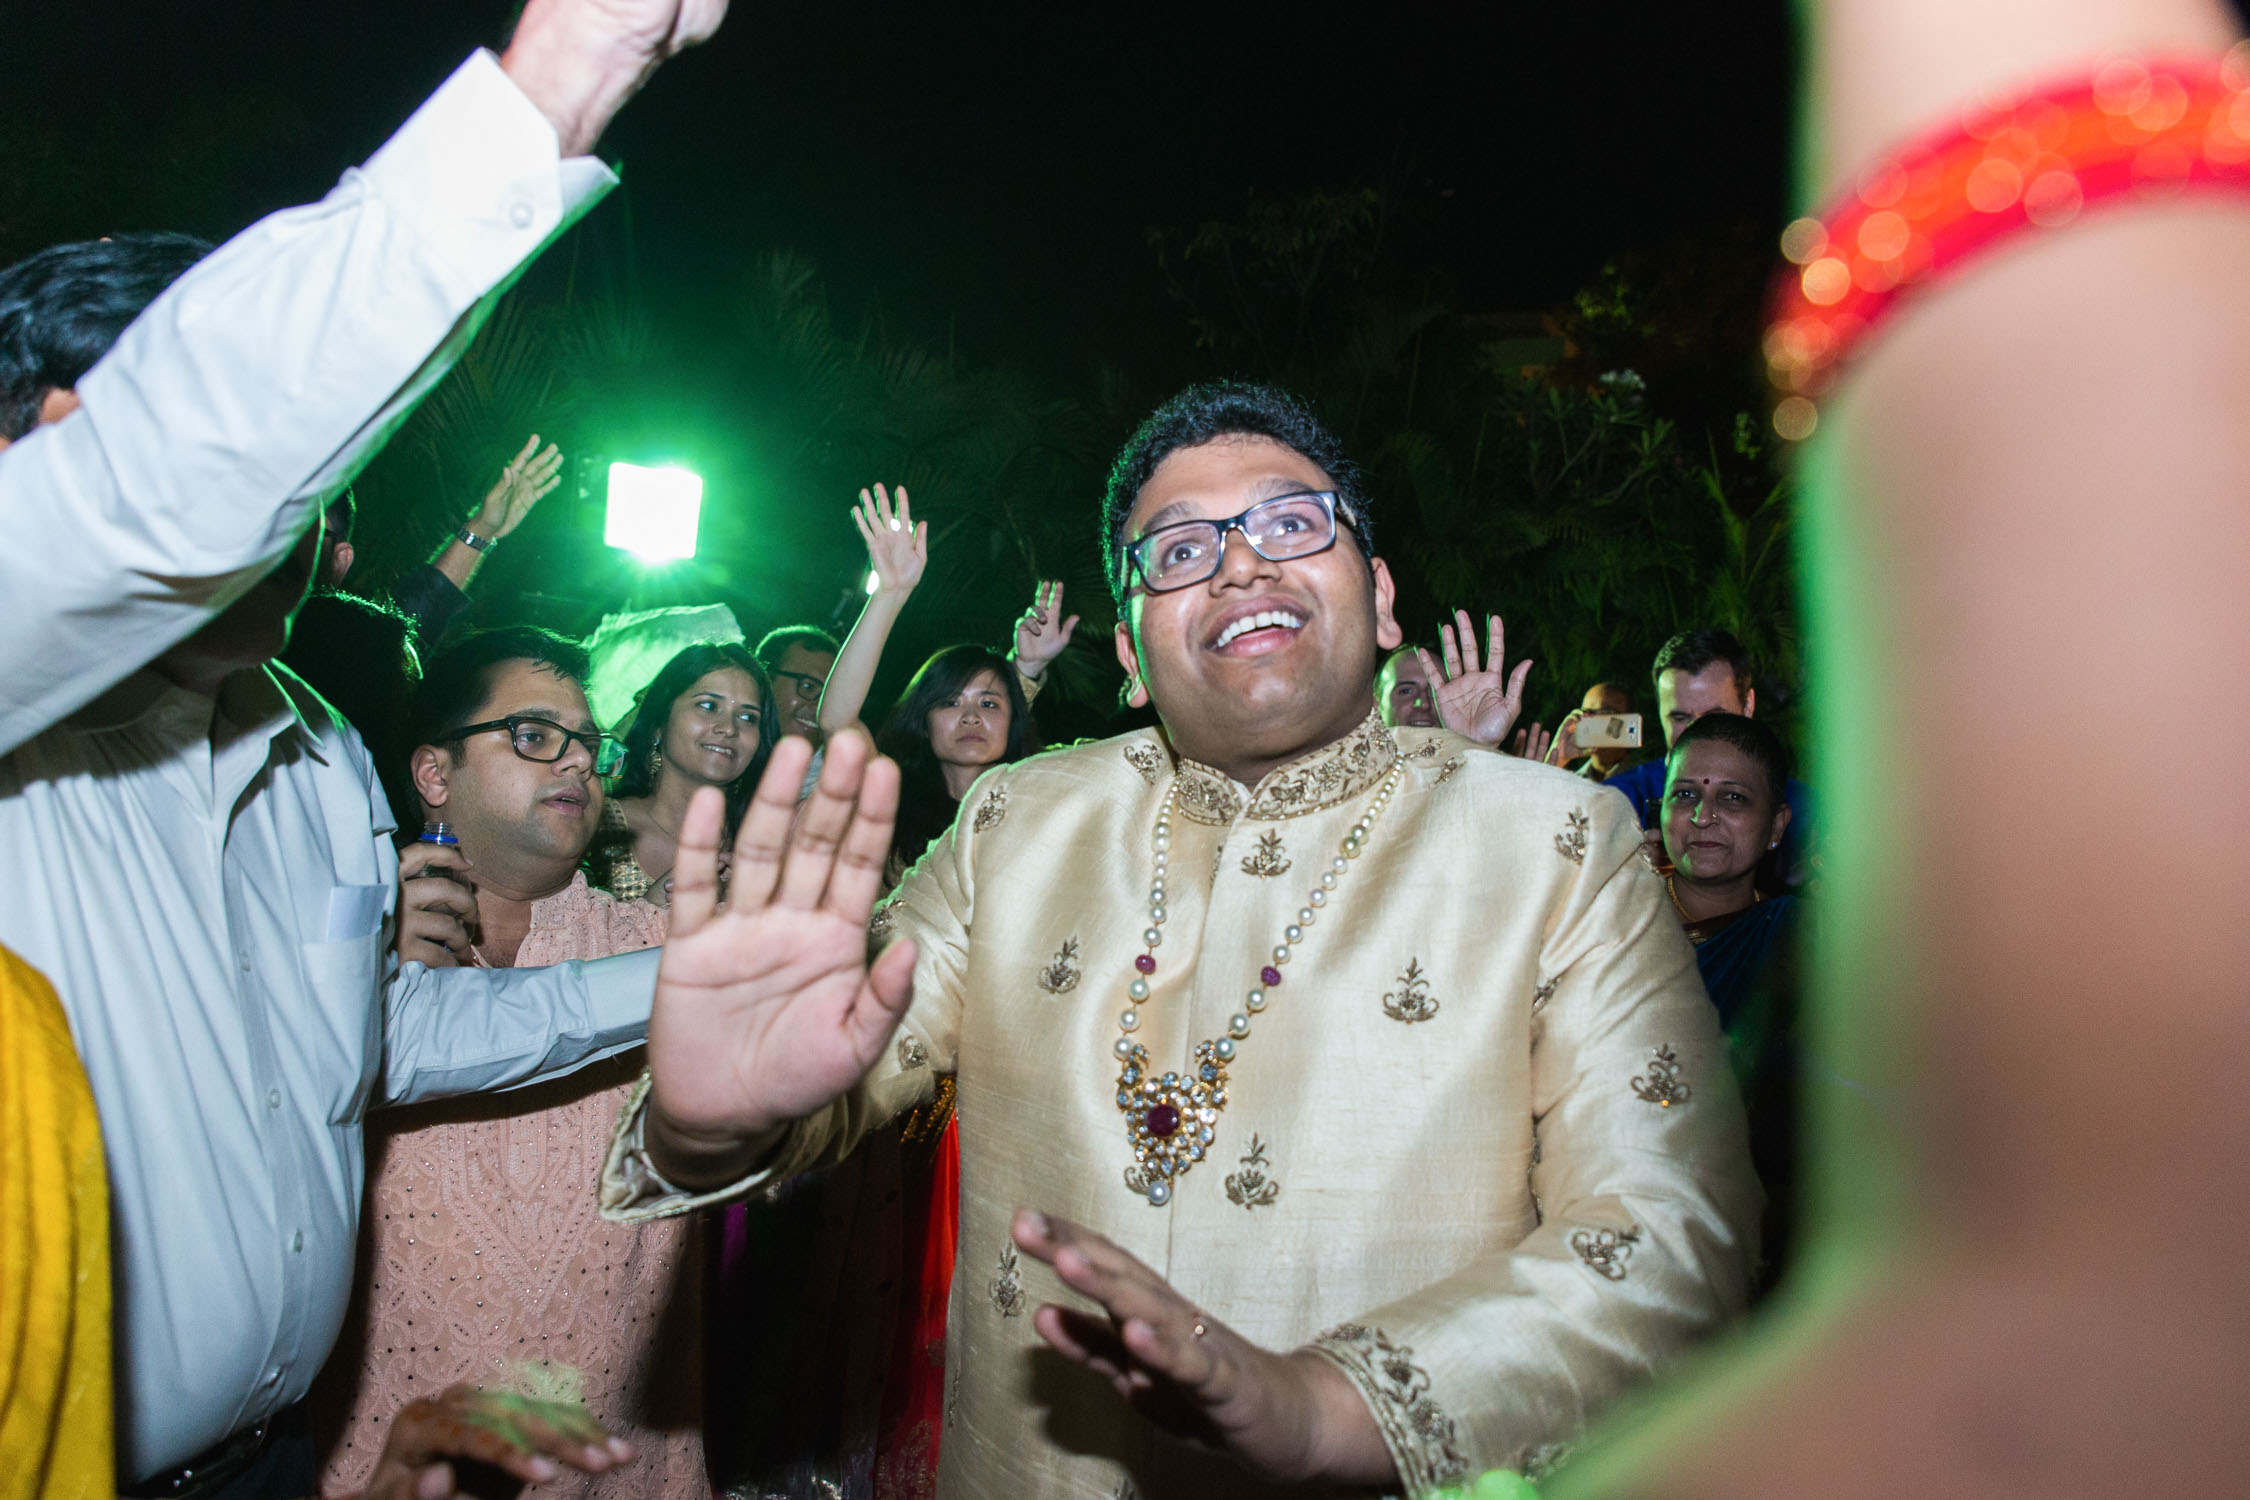 photo of wedding bharat in hyderabad by dropdstudioweddings